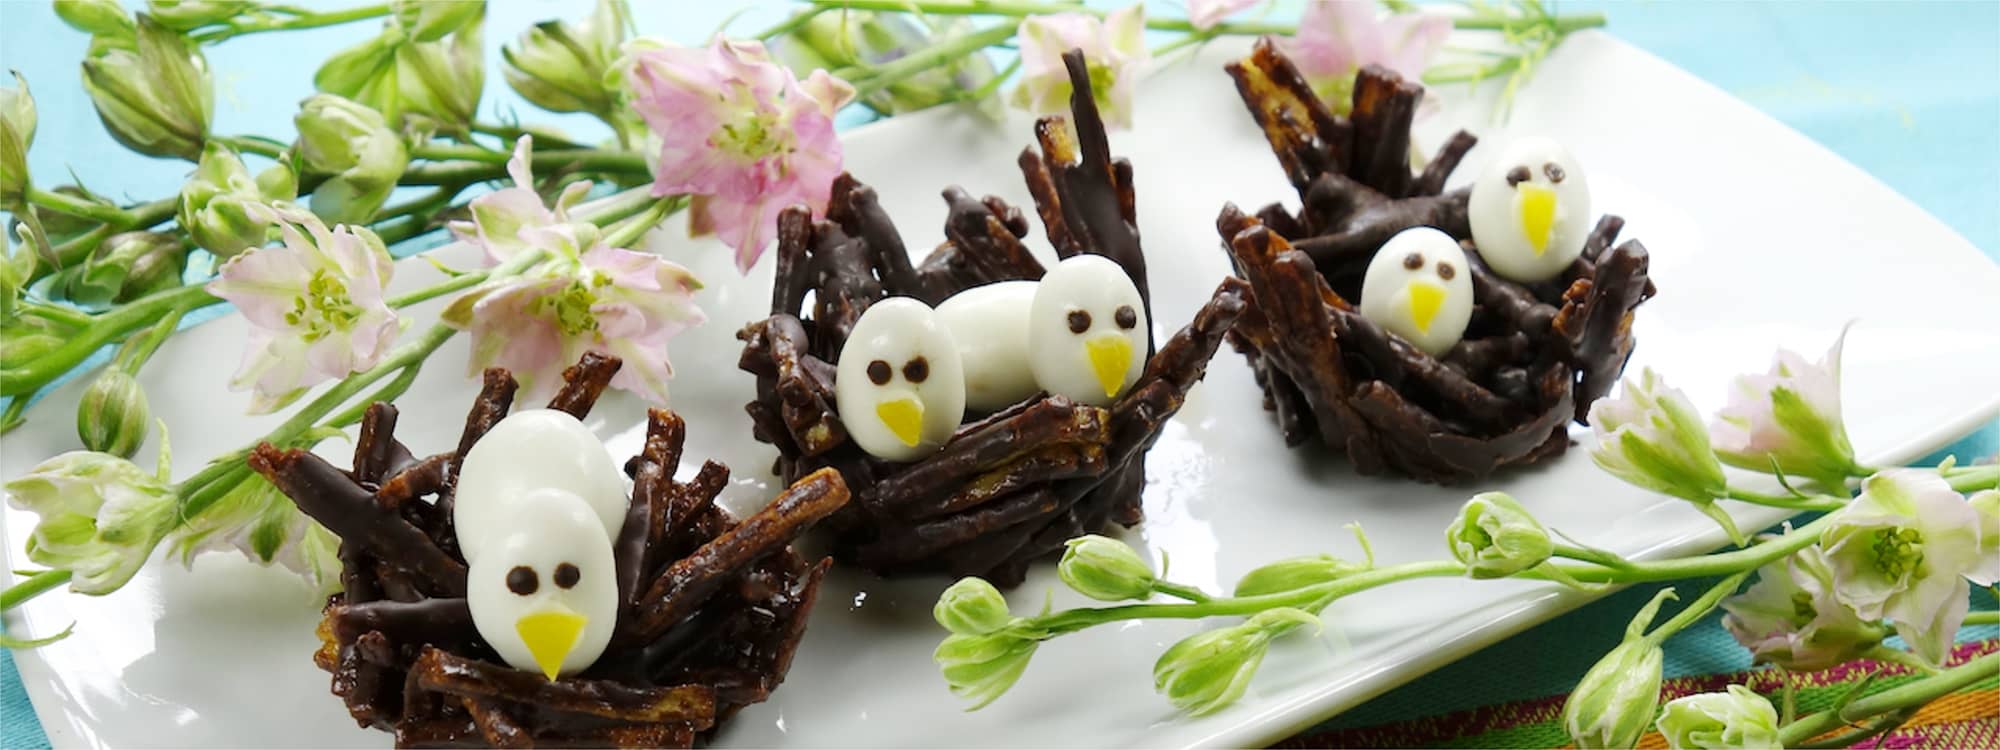 Chocolate bird nests with white chocolate eggs